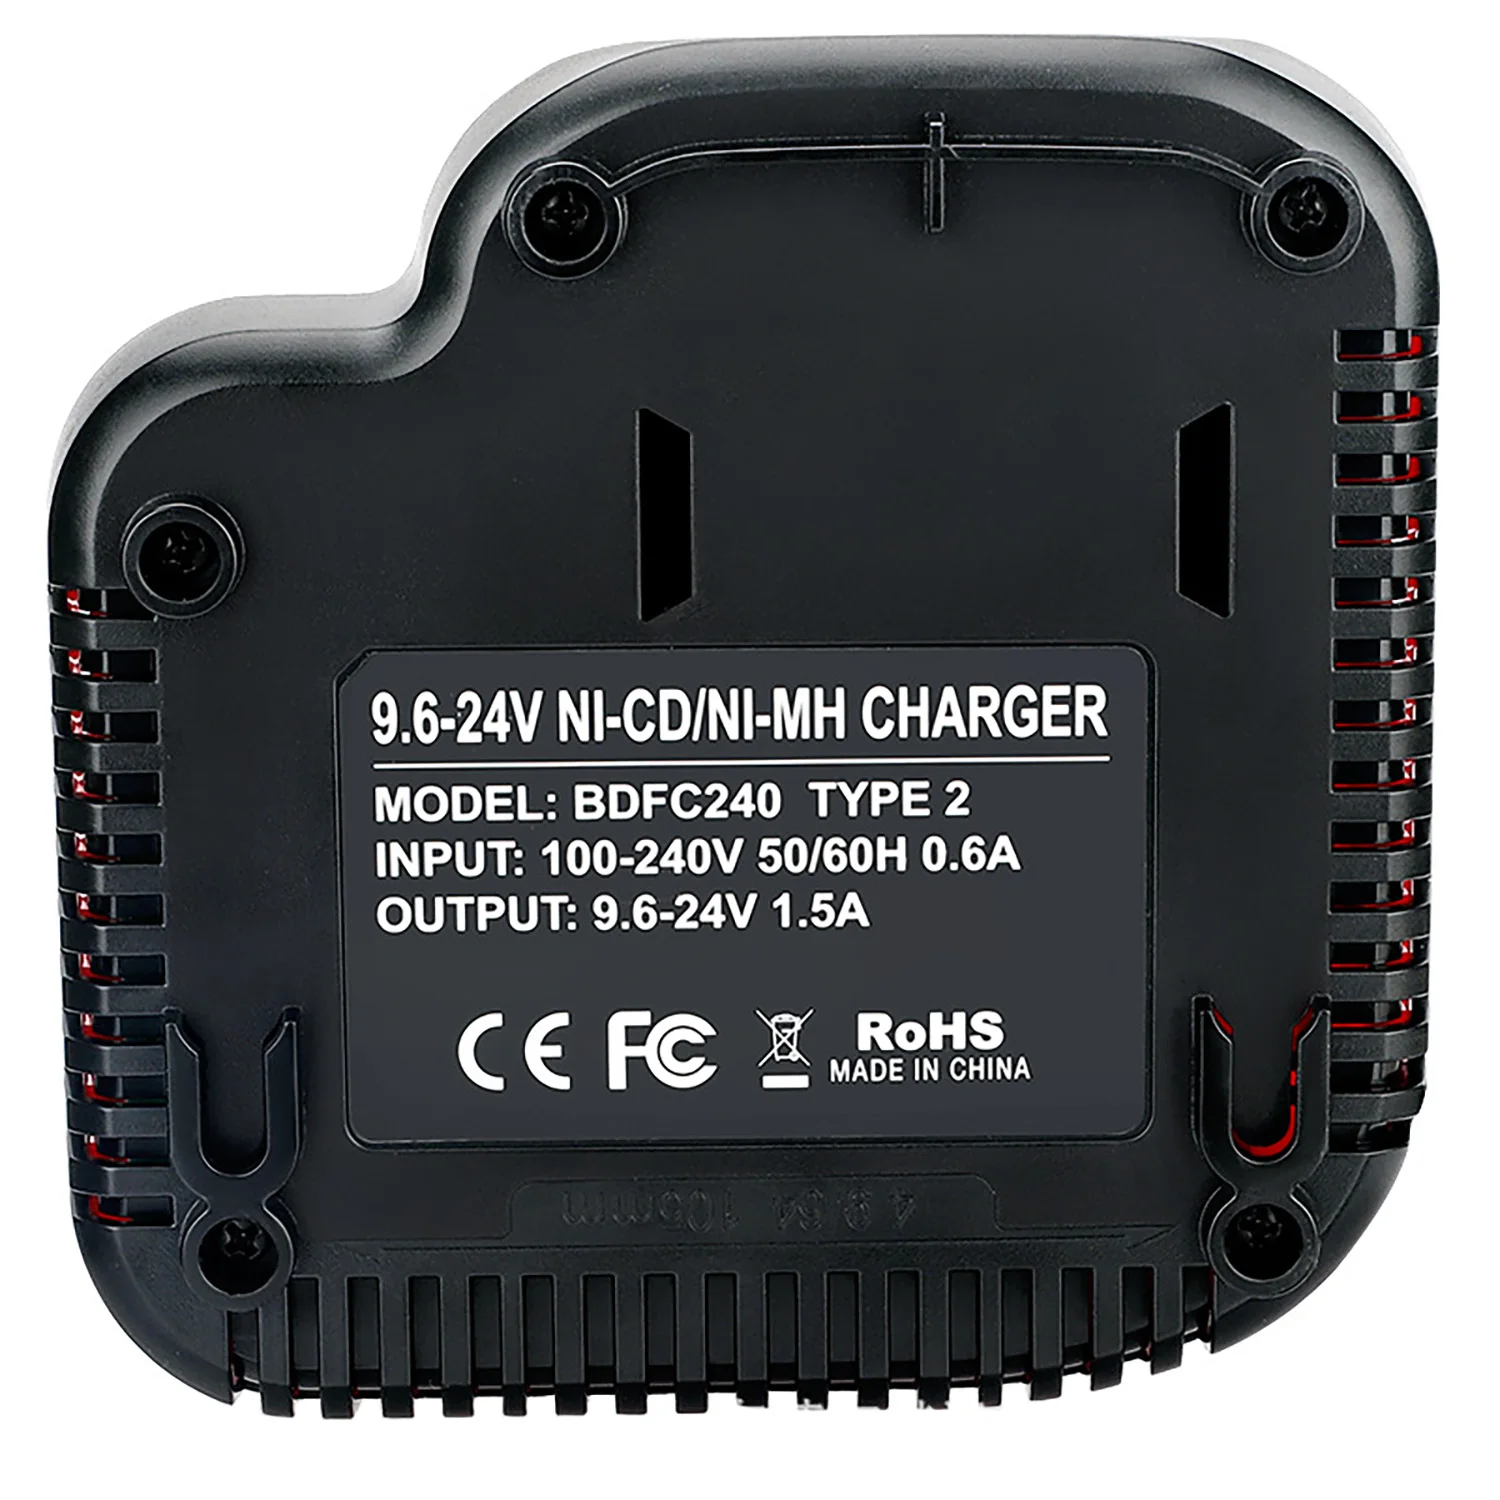 C&P BD Ch03 Used Charger FireStorm 9.6V - 24V FS240FC NicdNimh